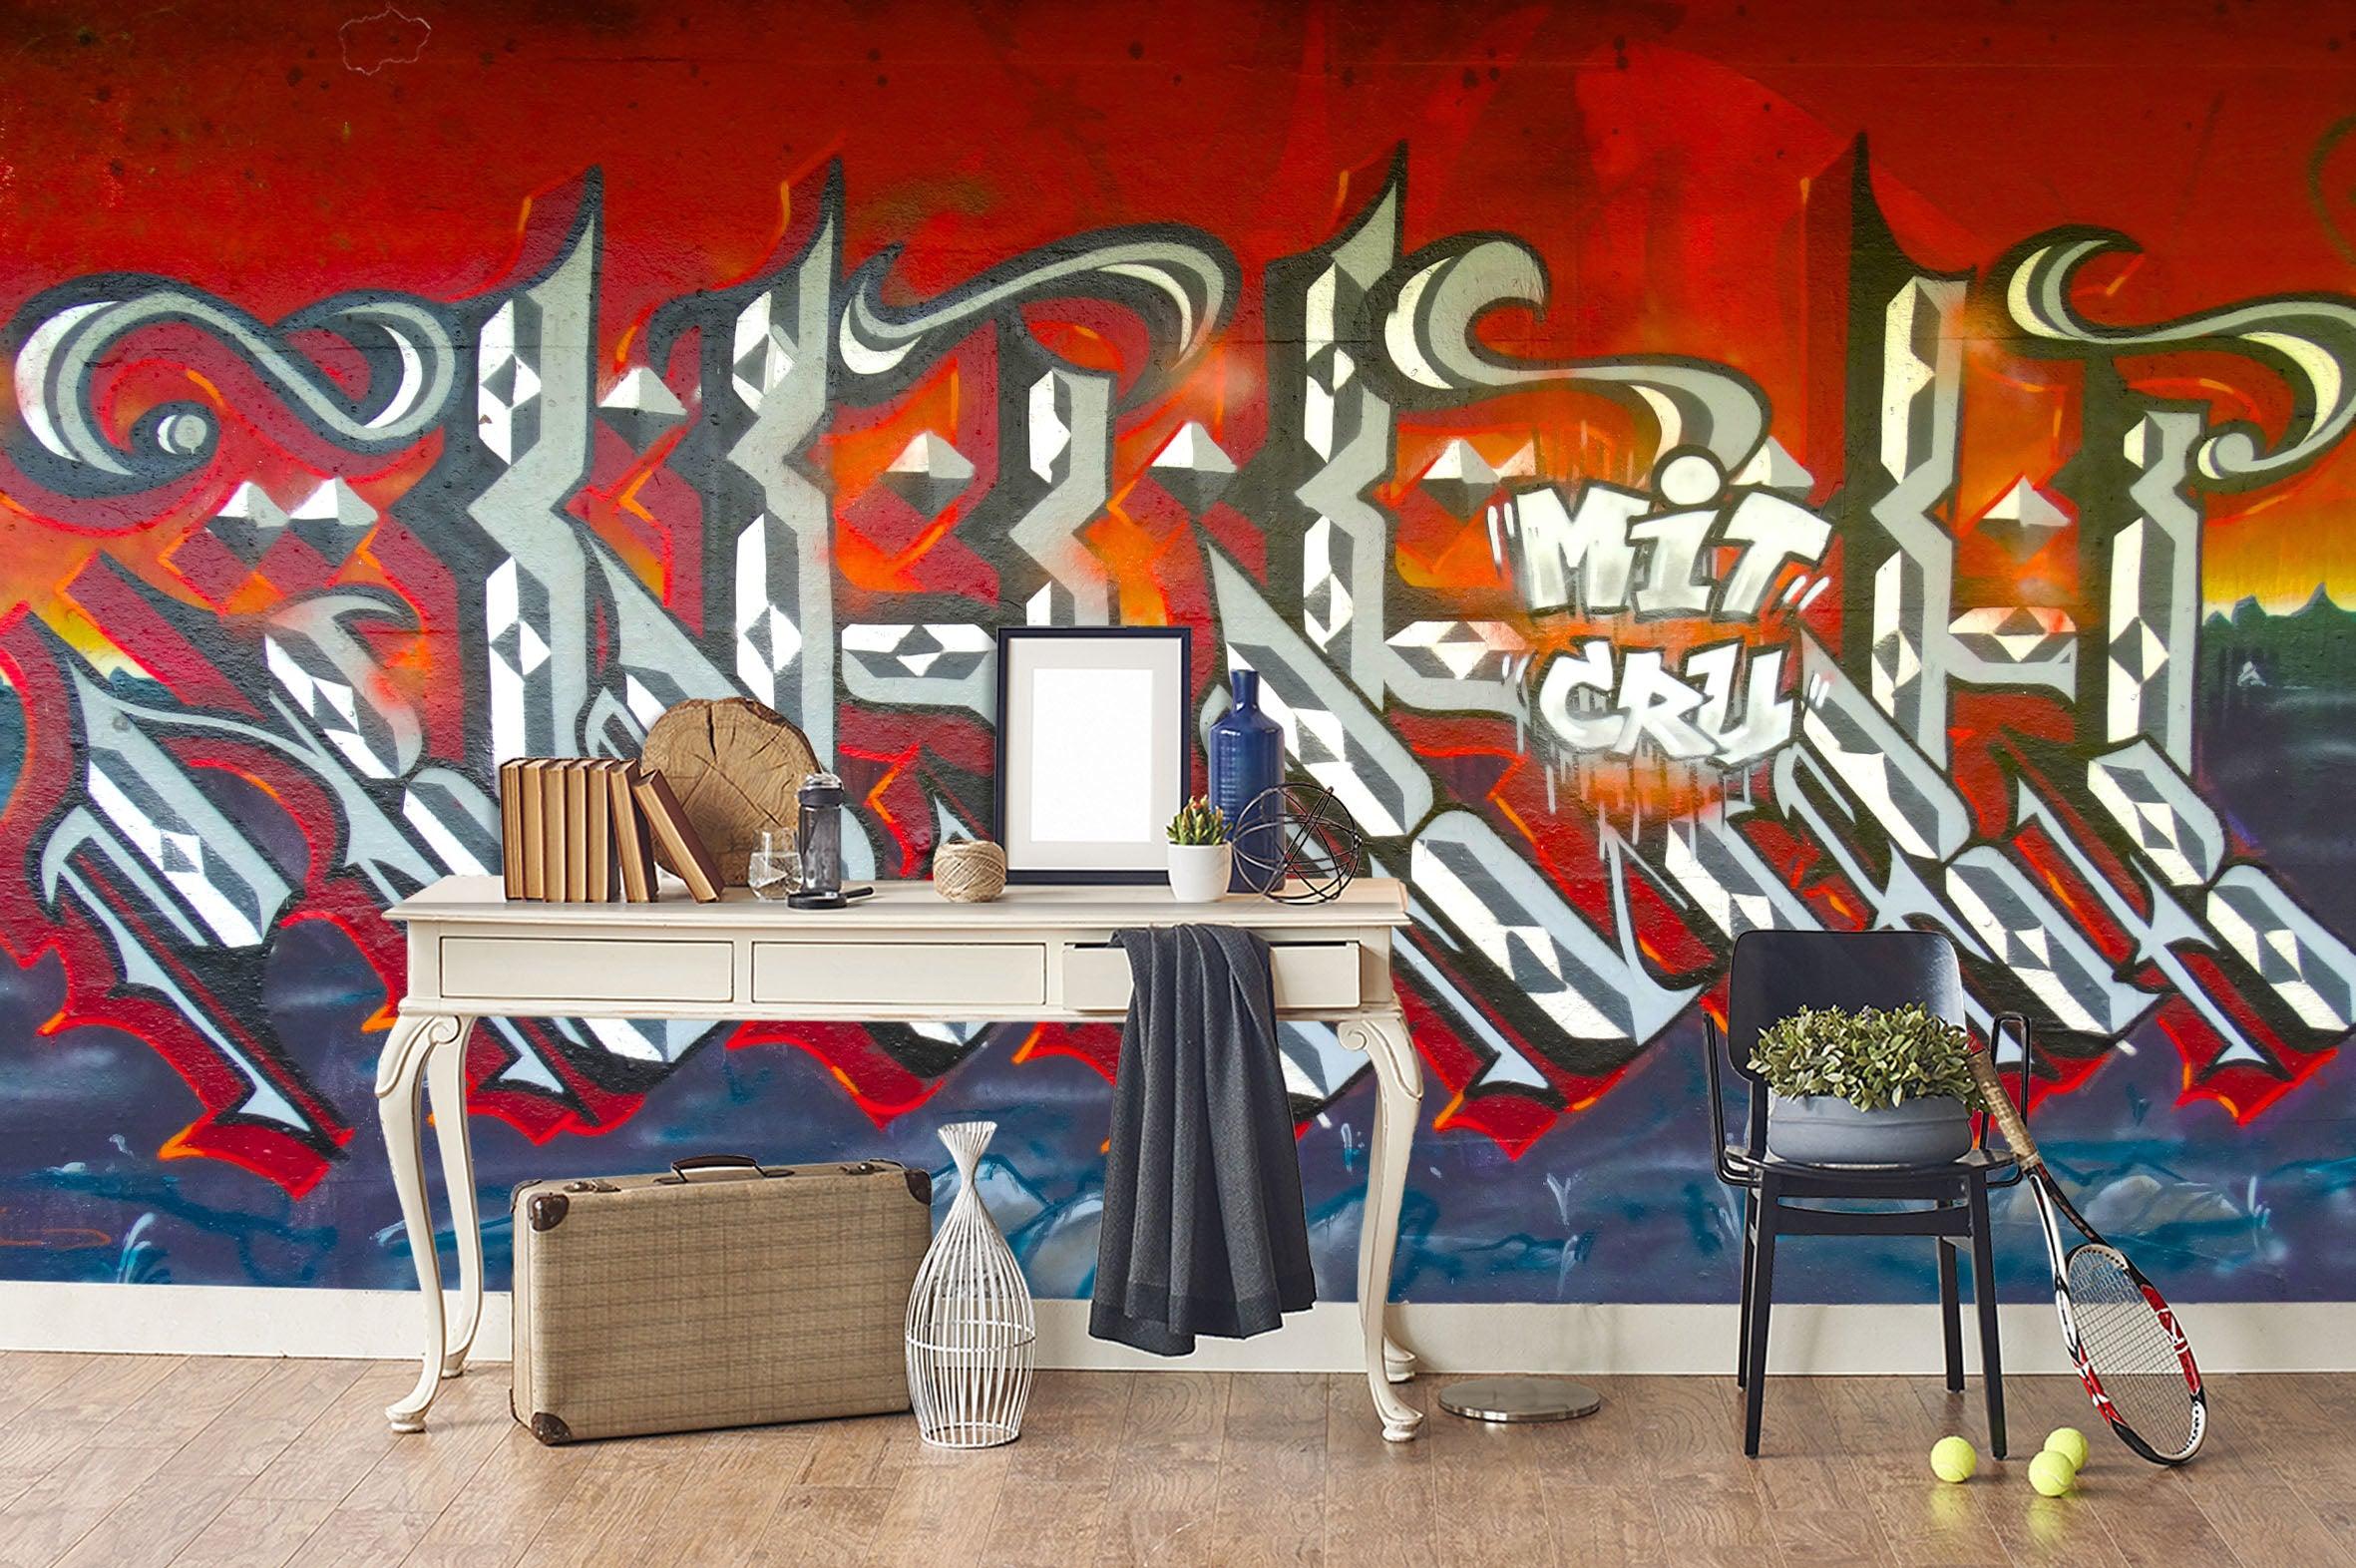 3D Red Brick Abstract Slogan Graffiti Wall Mural Wallpaper 95- Jess Art Decoration